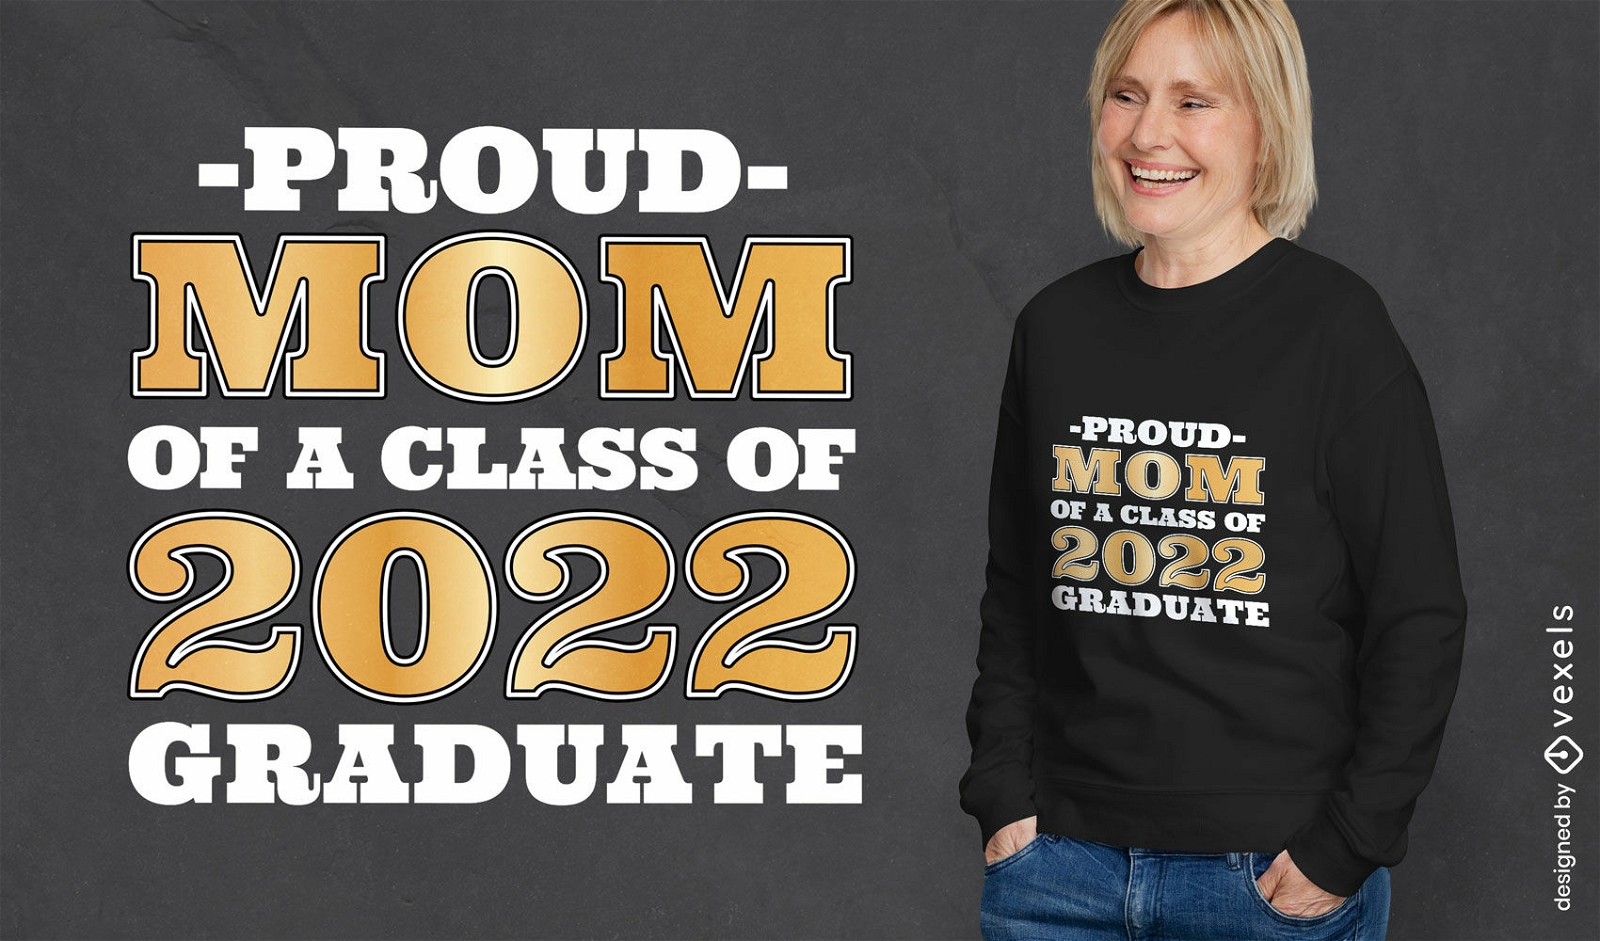 2022 proud mom of graduate t-shirt design